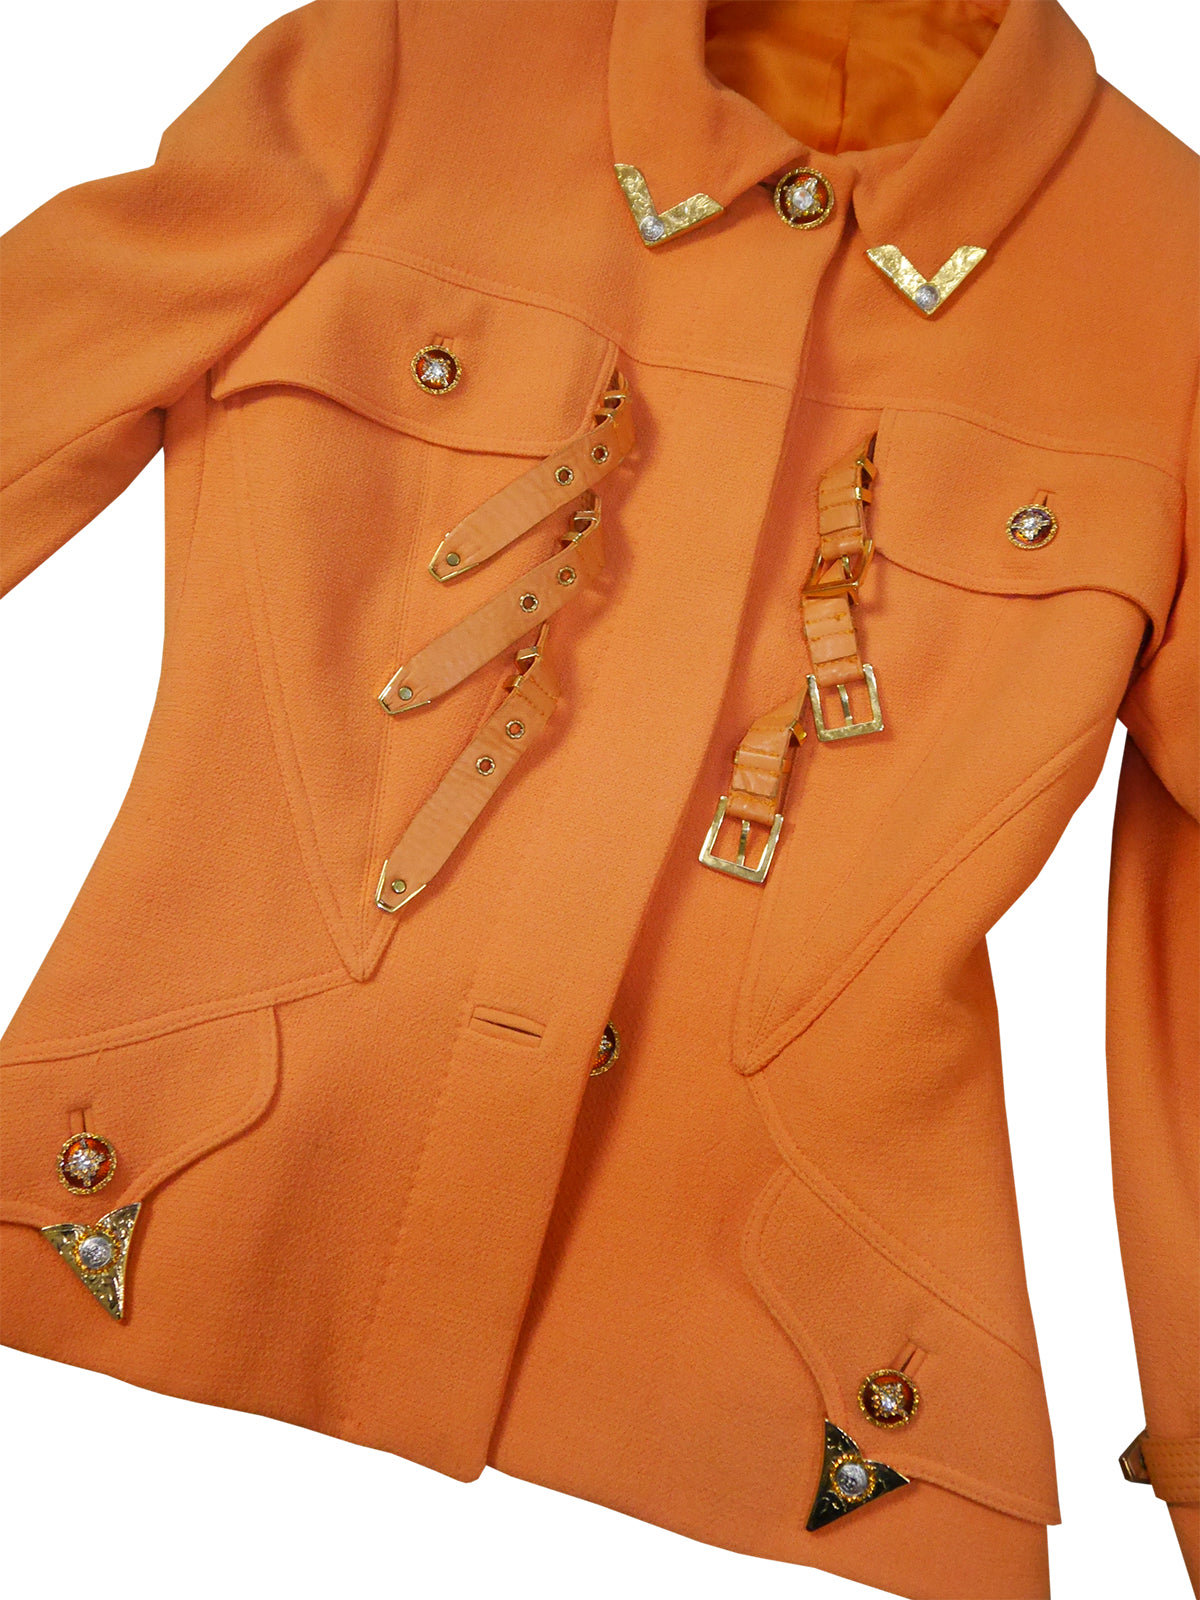 GIANNI VERSACE Couture Fall 1992 Tangerine Bondage Skirt Suit